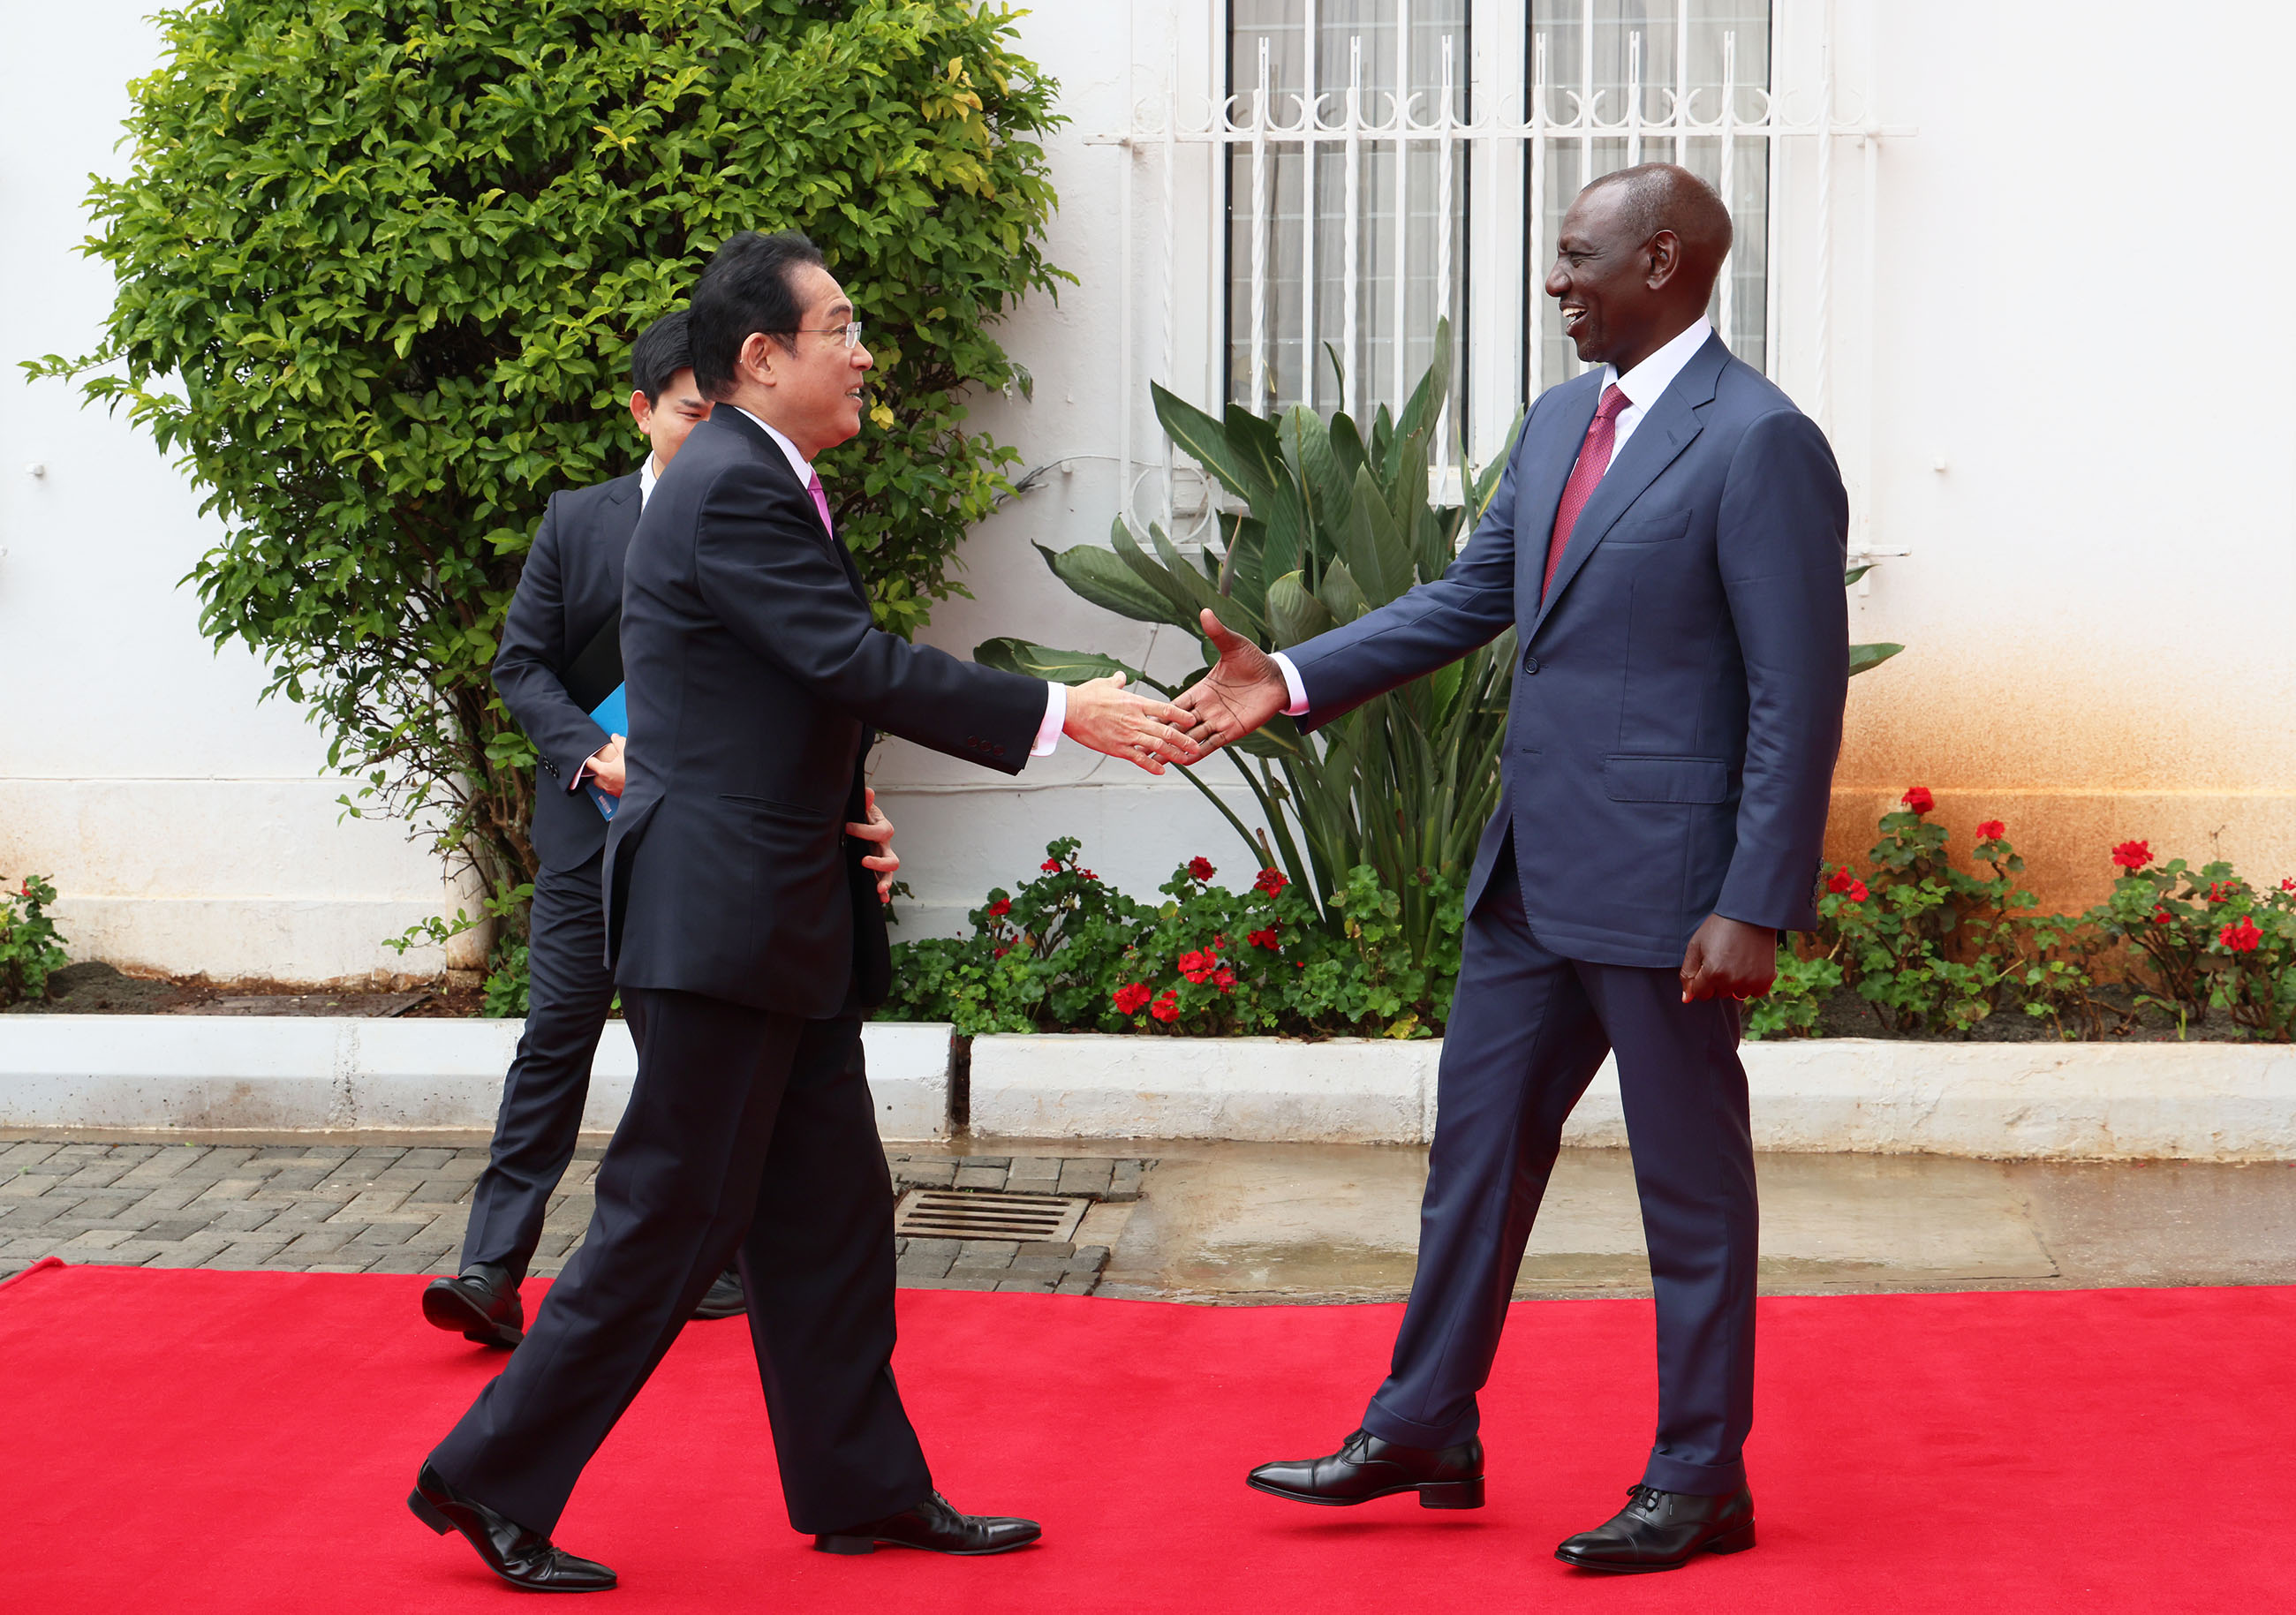 Prime Minister Kishida arriving in Kenya (4)